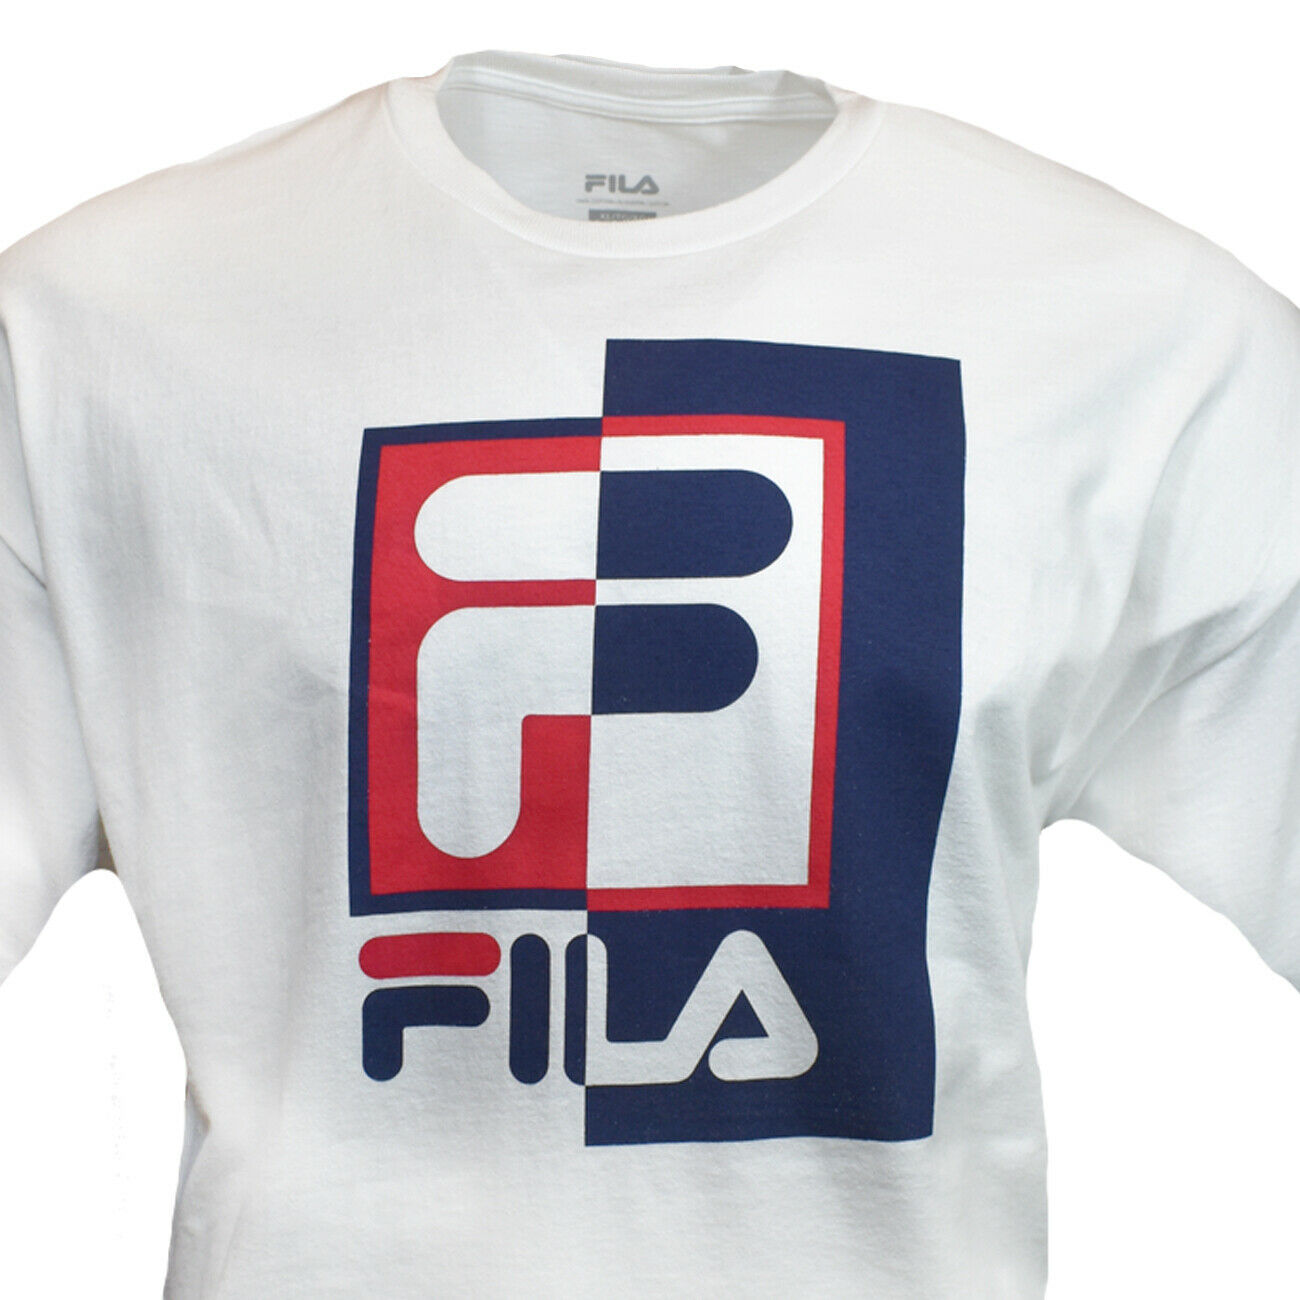 FILA Men's Retro Squared T-shirt, White with Red & Blue